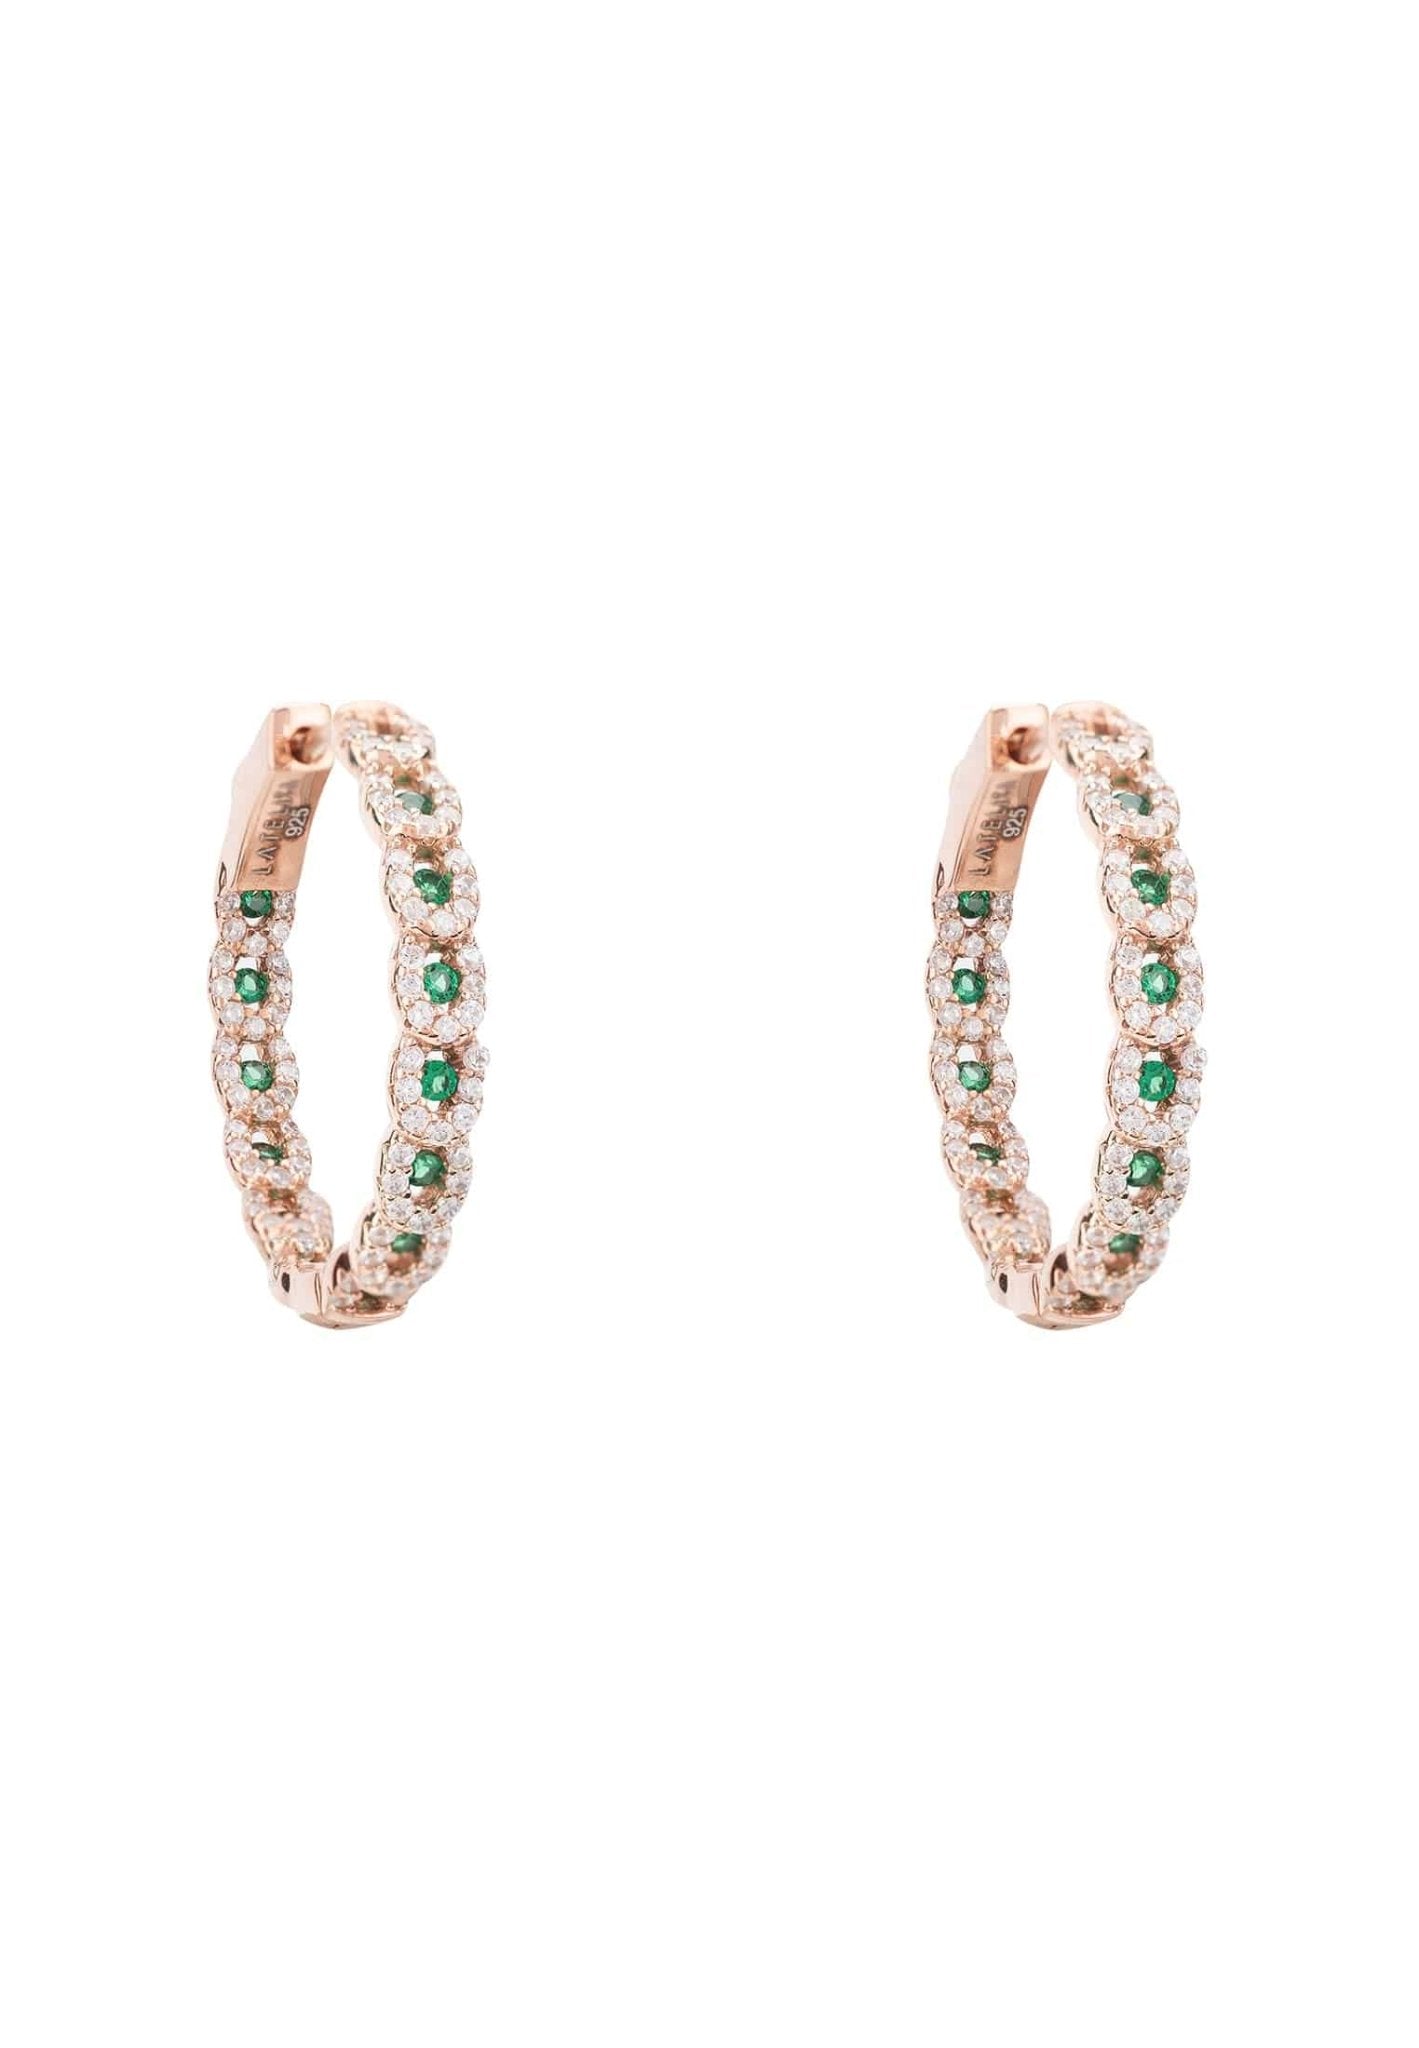 Duchess Hoop Earrings Rosegold Emerald Green - LATELITA Earrings